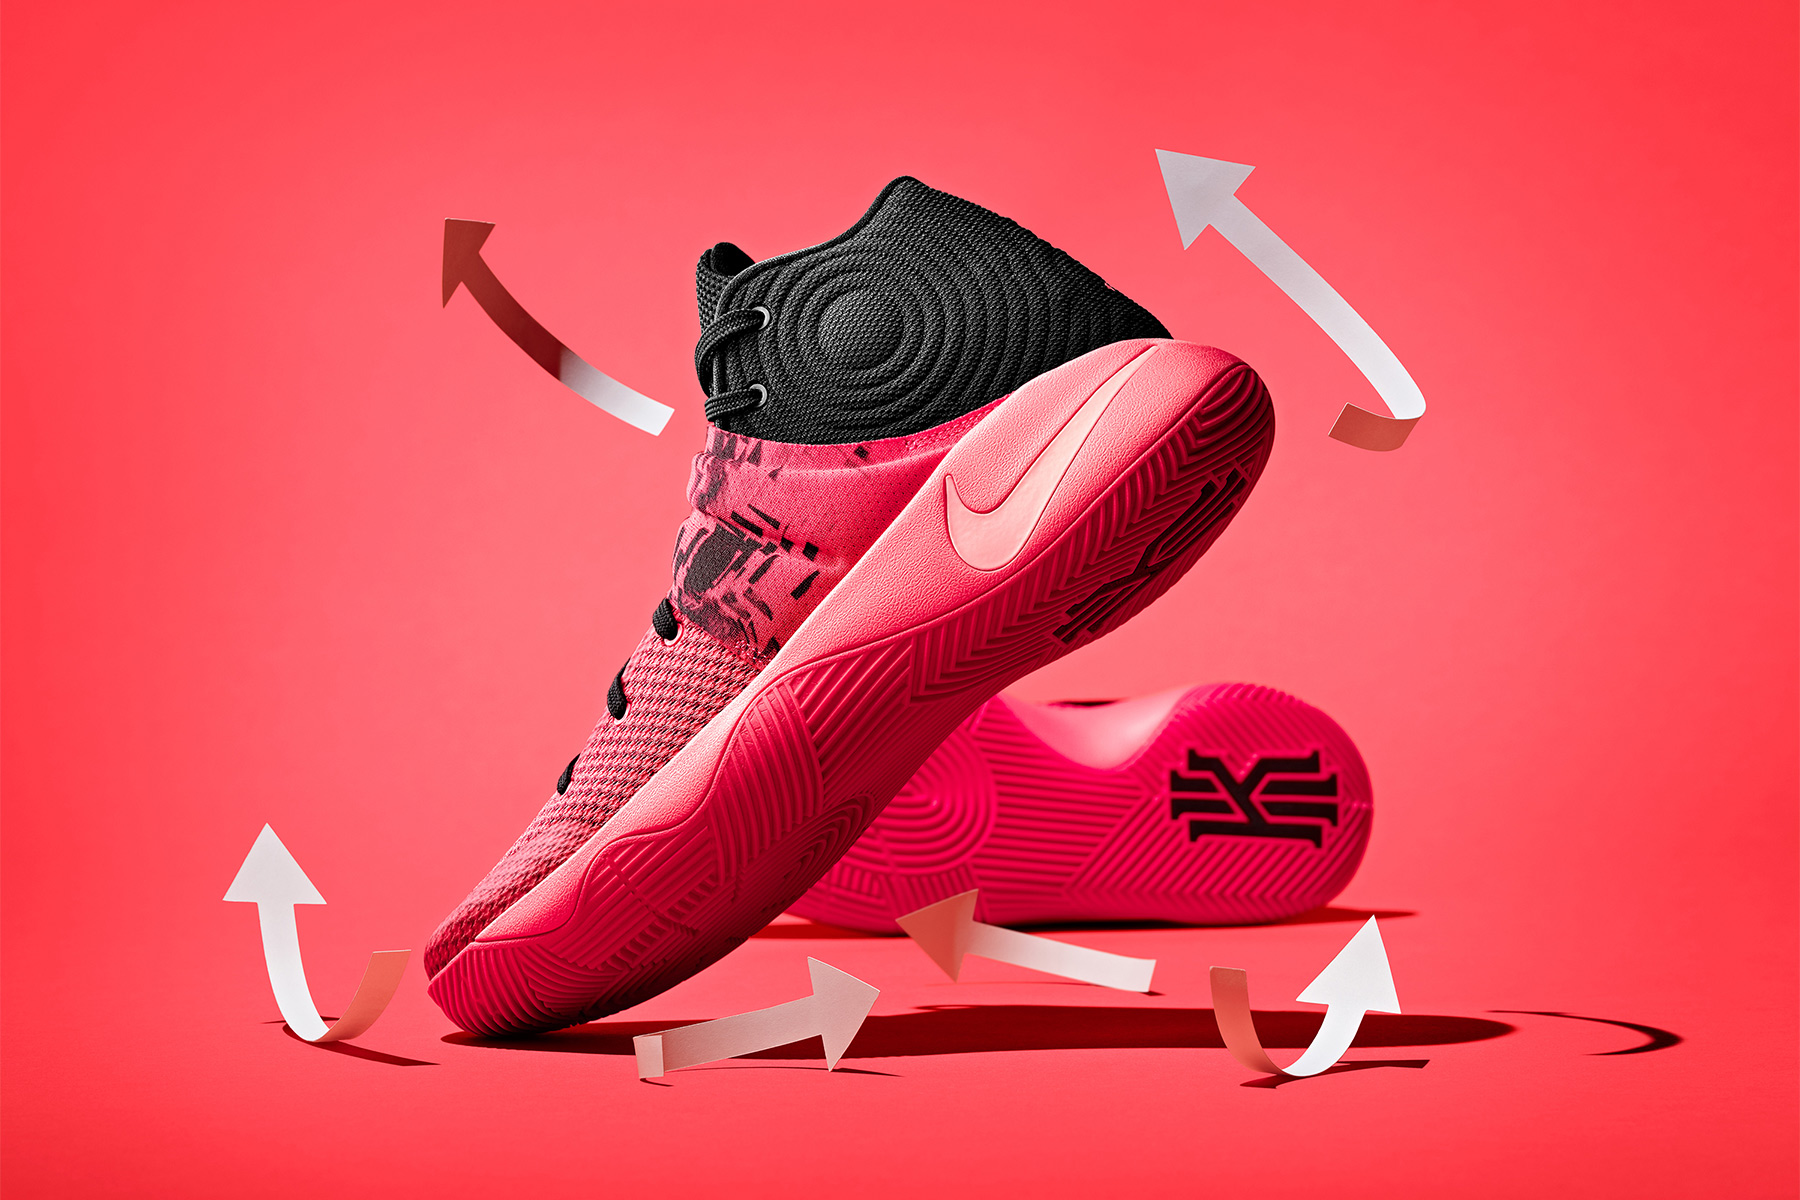 NikeKyrie_Product_MrCuriosity_David Emmite 